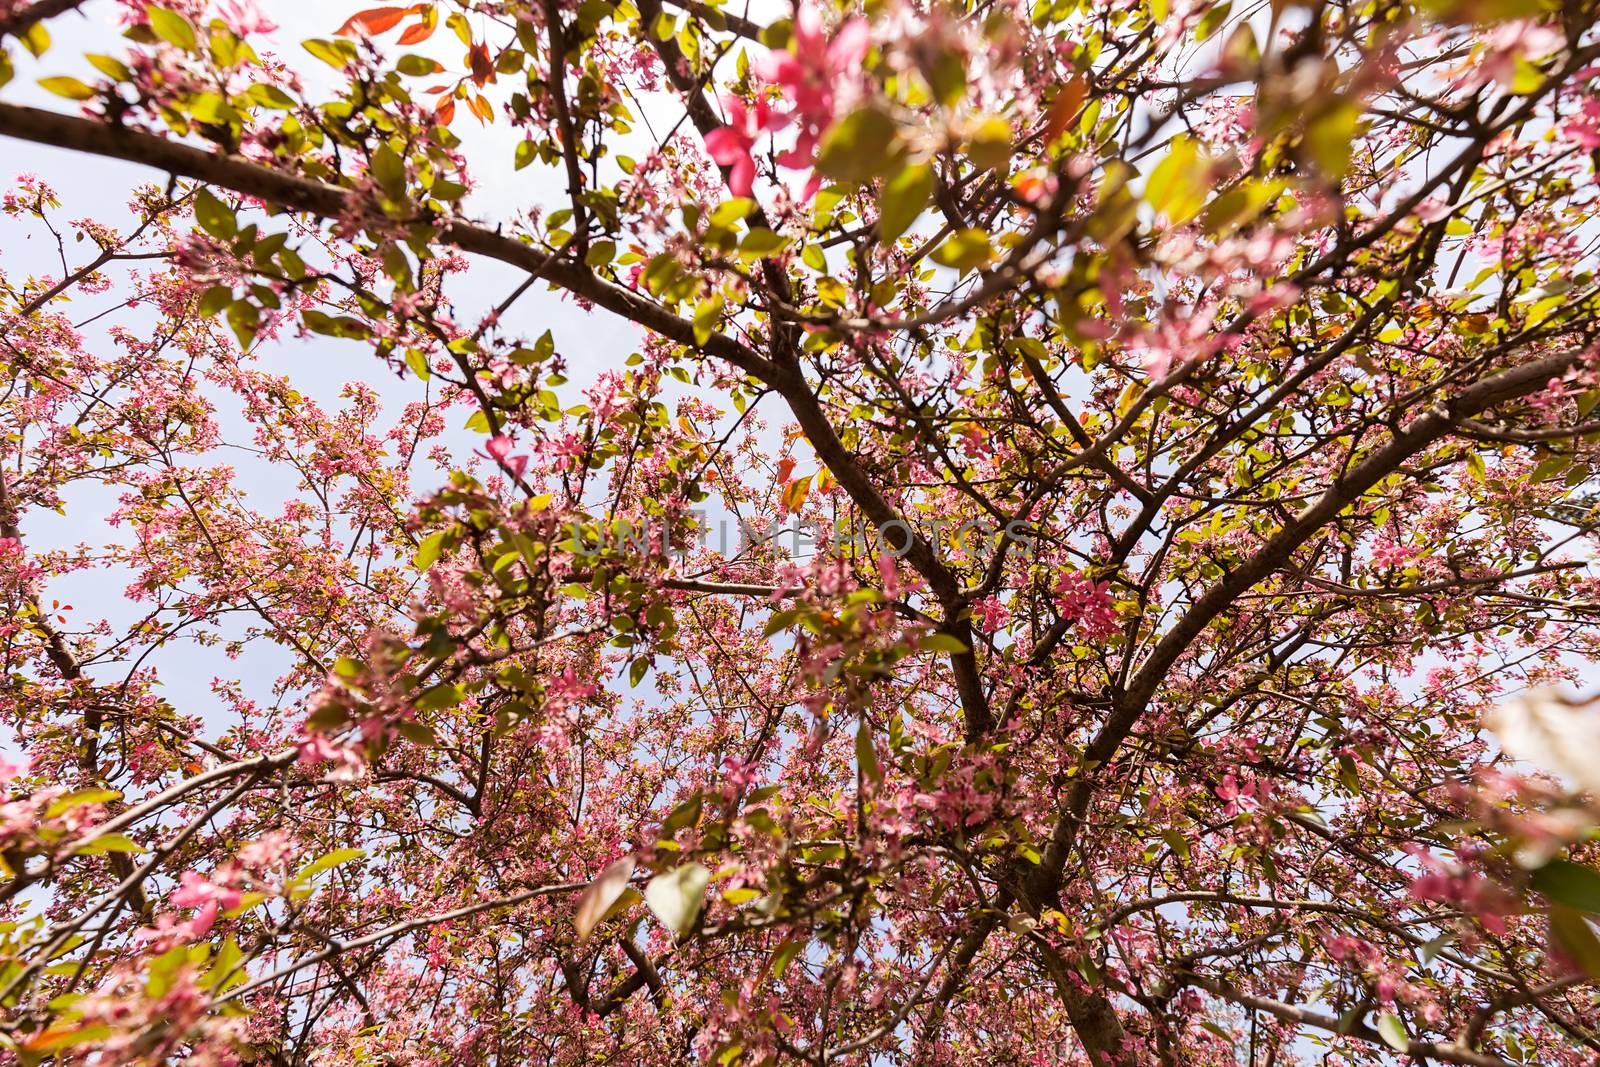  tree in bloom by vladimirnenezic